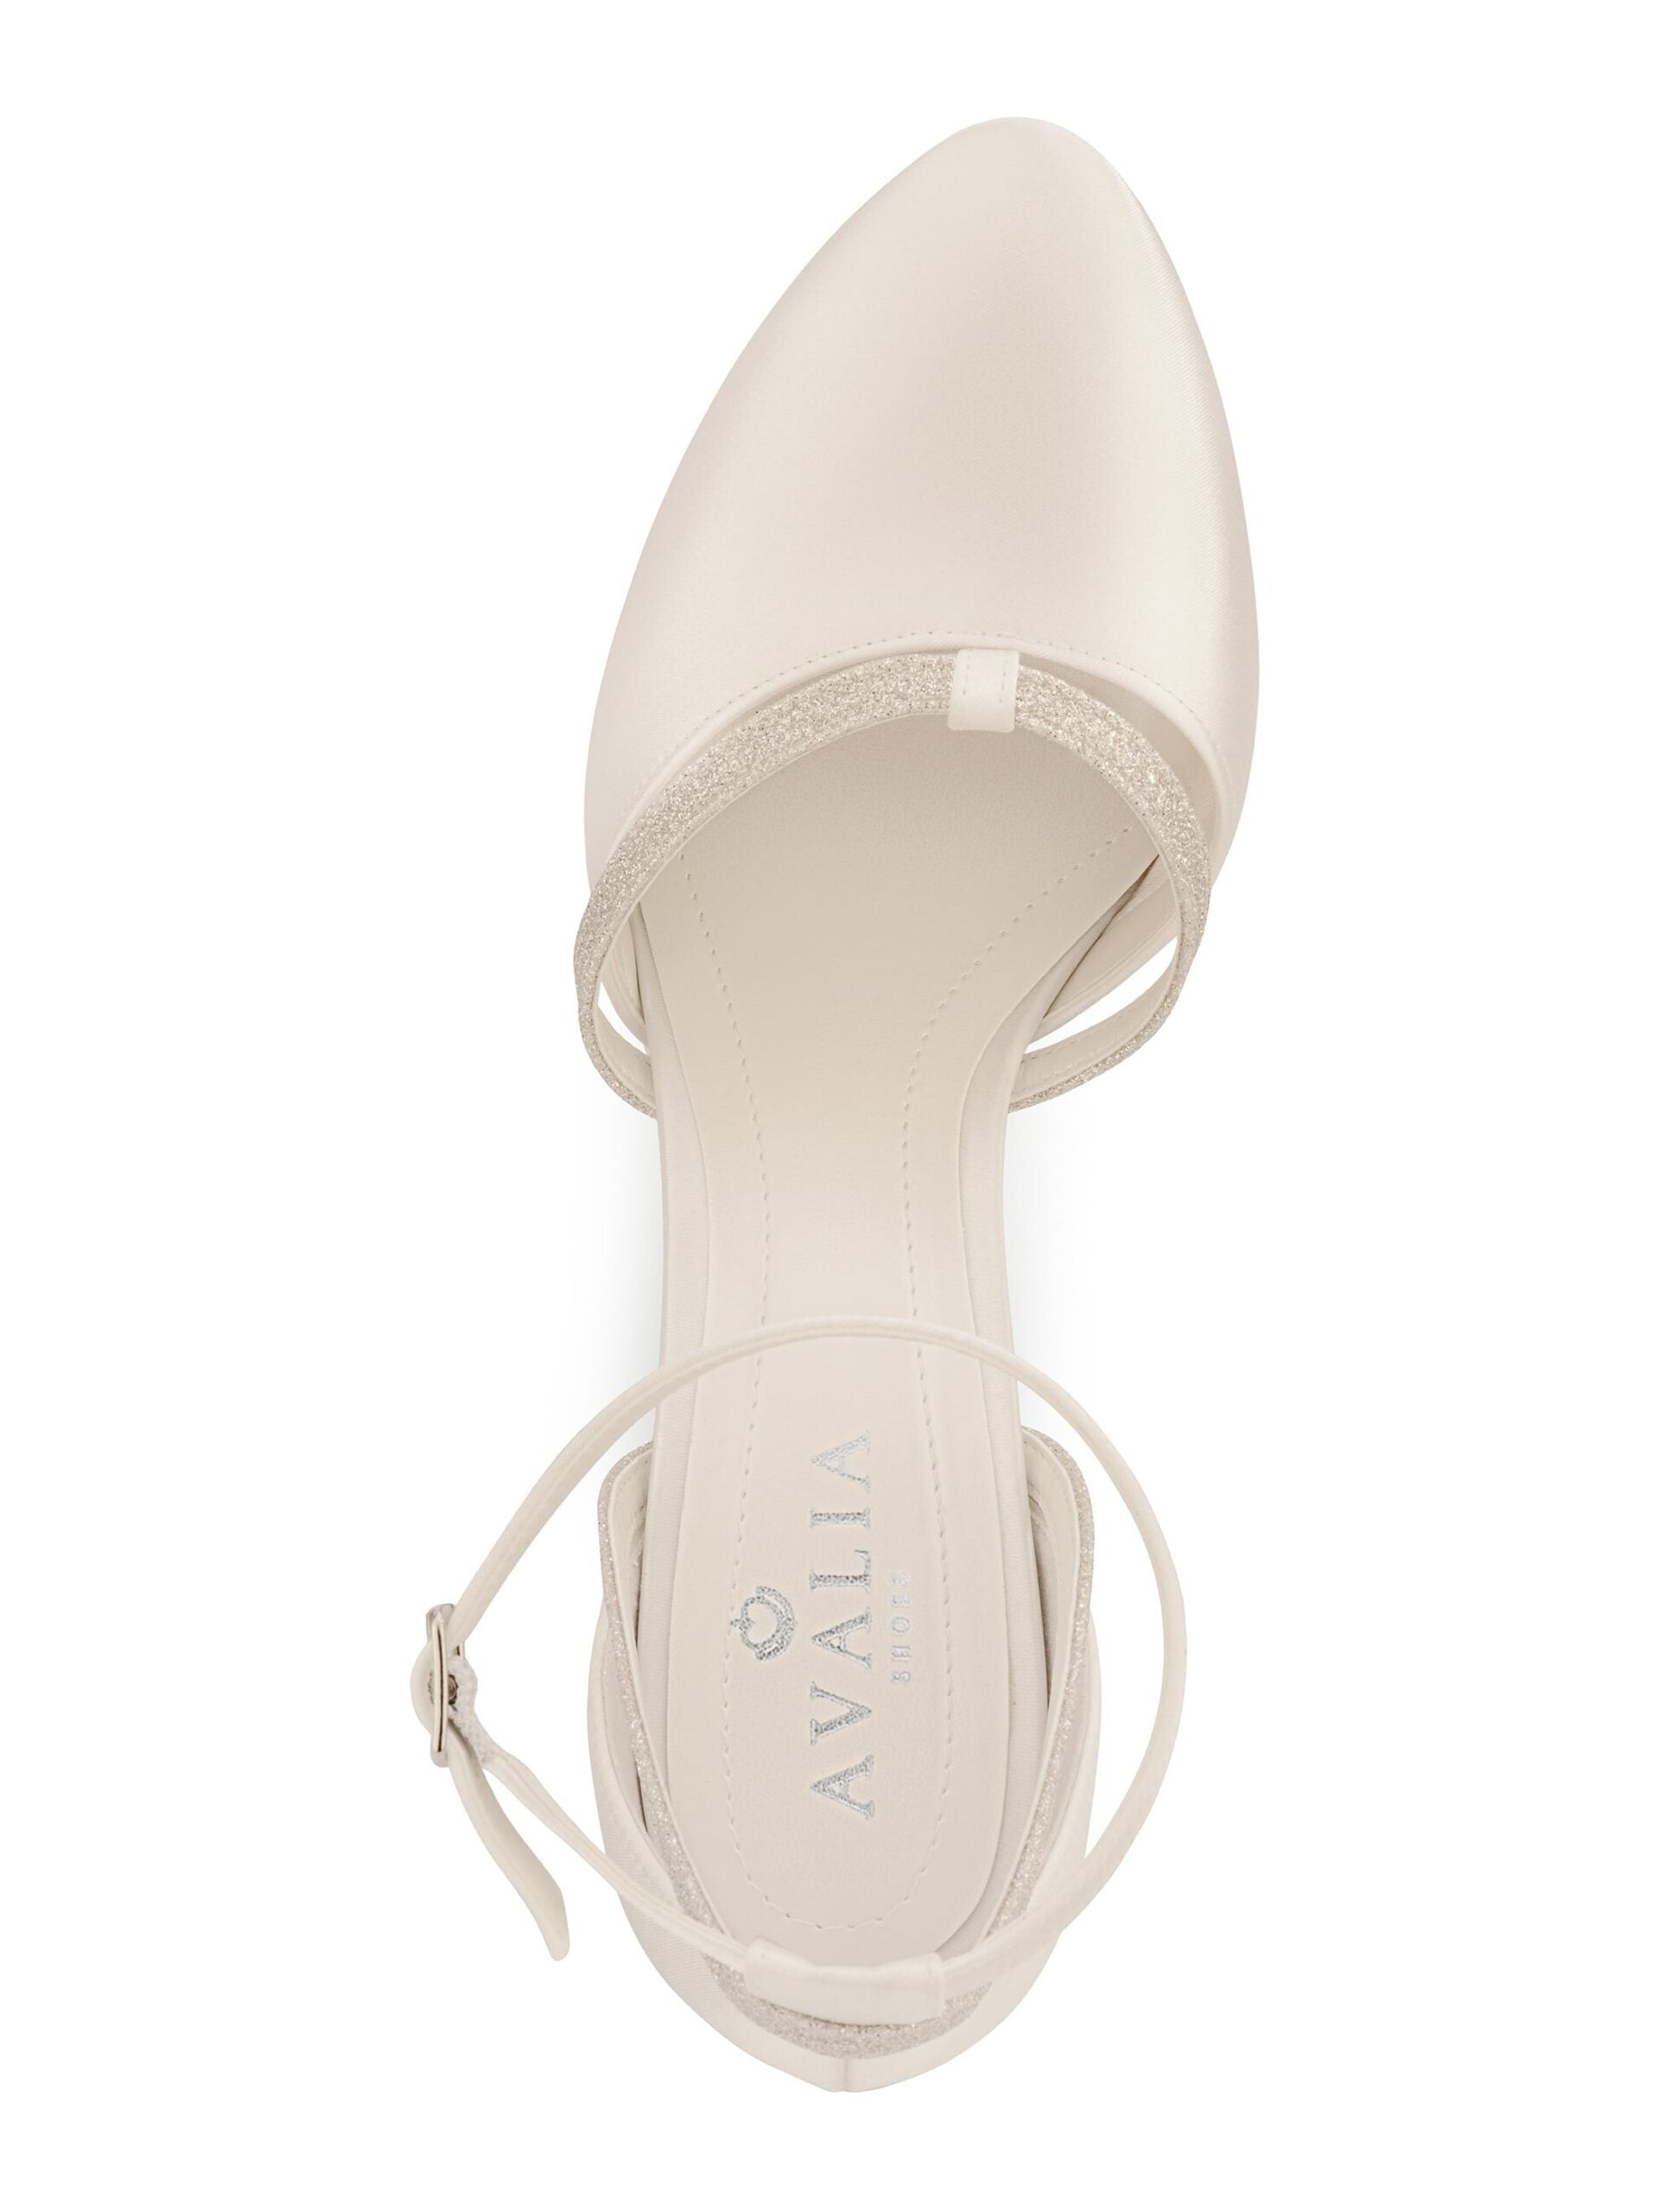 Avalia Mary Bridal Shoes - everly-acbf